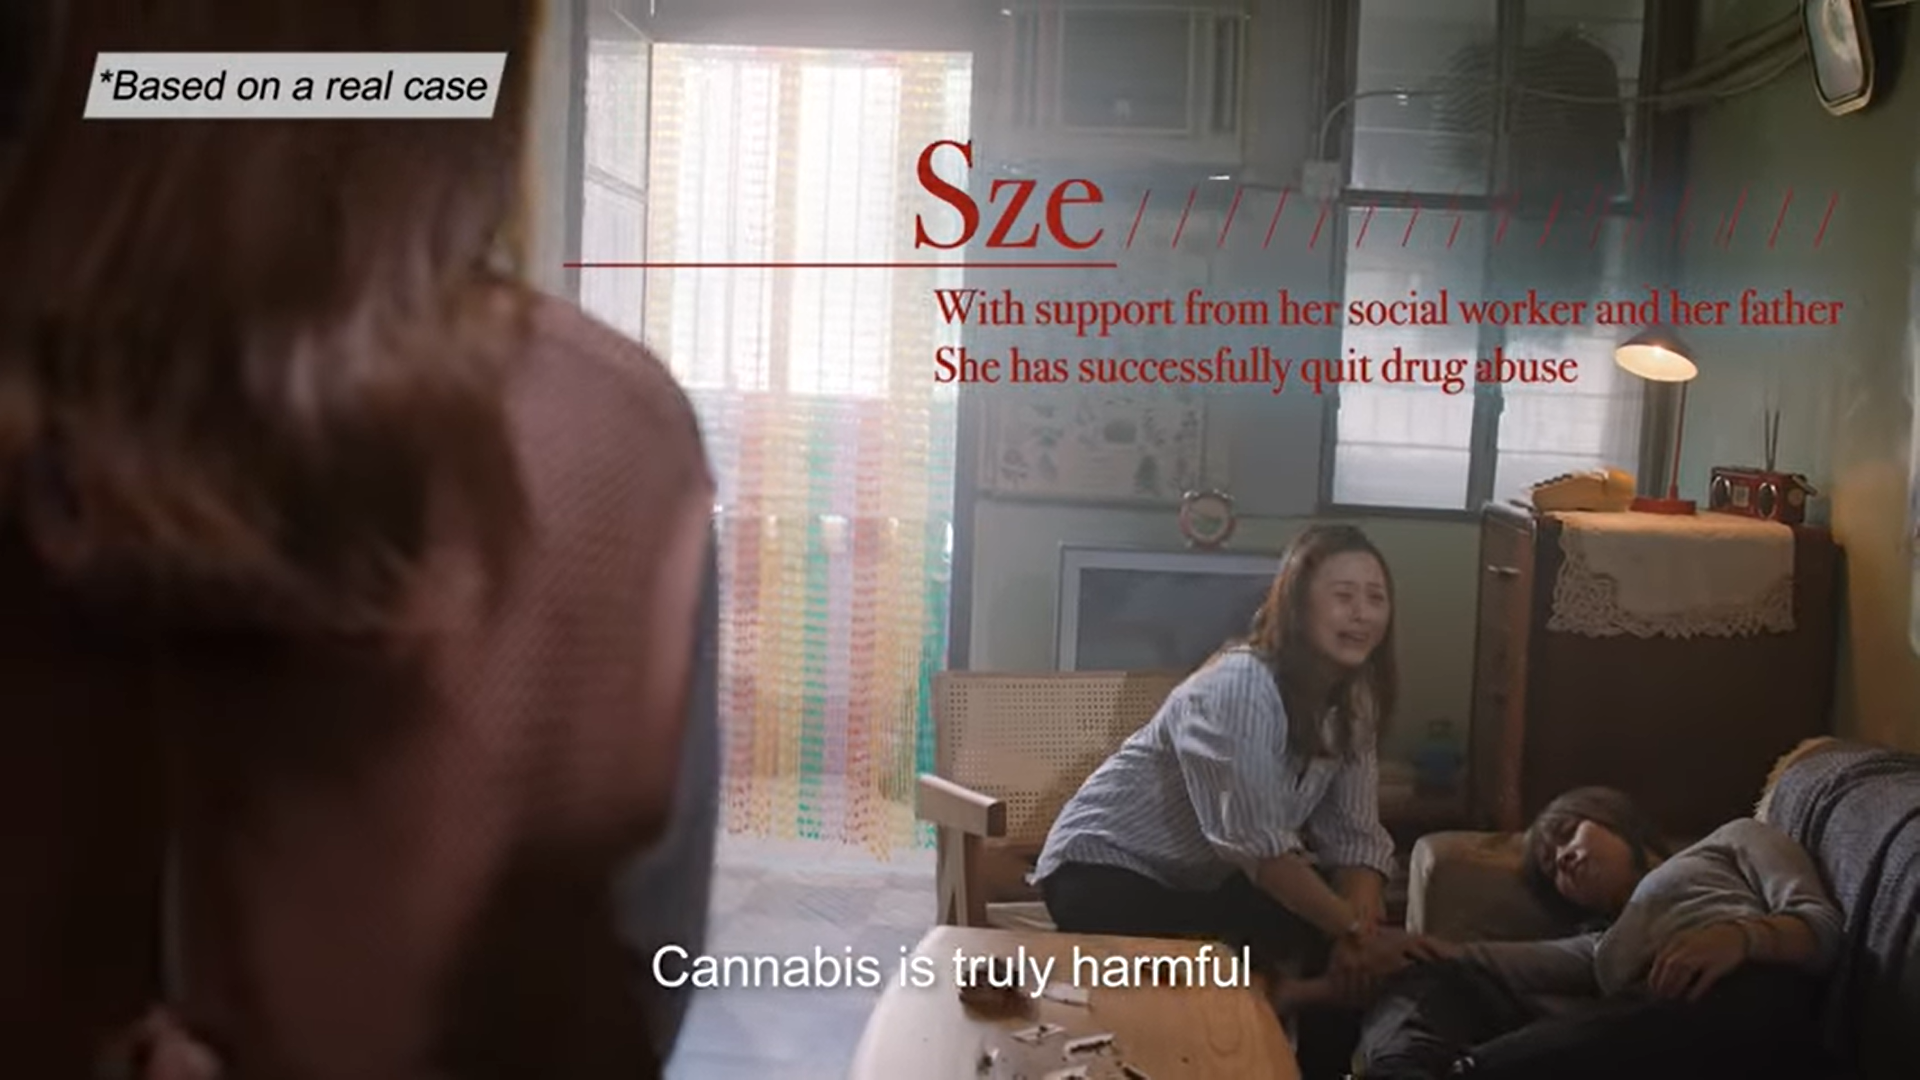 Cannabis is a drug